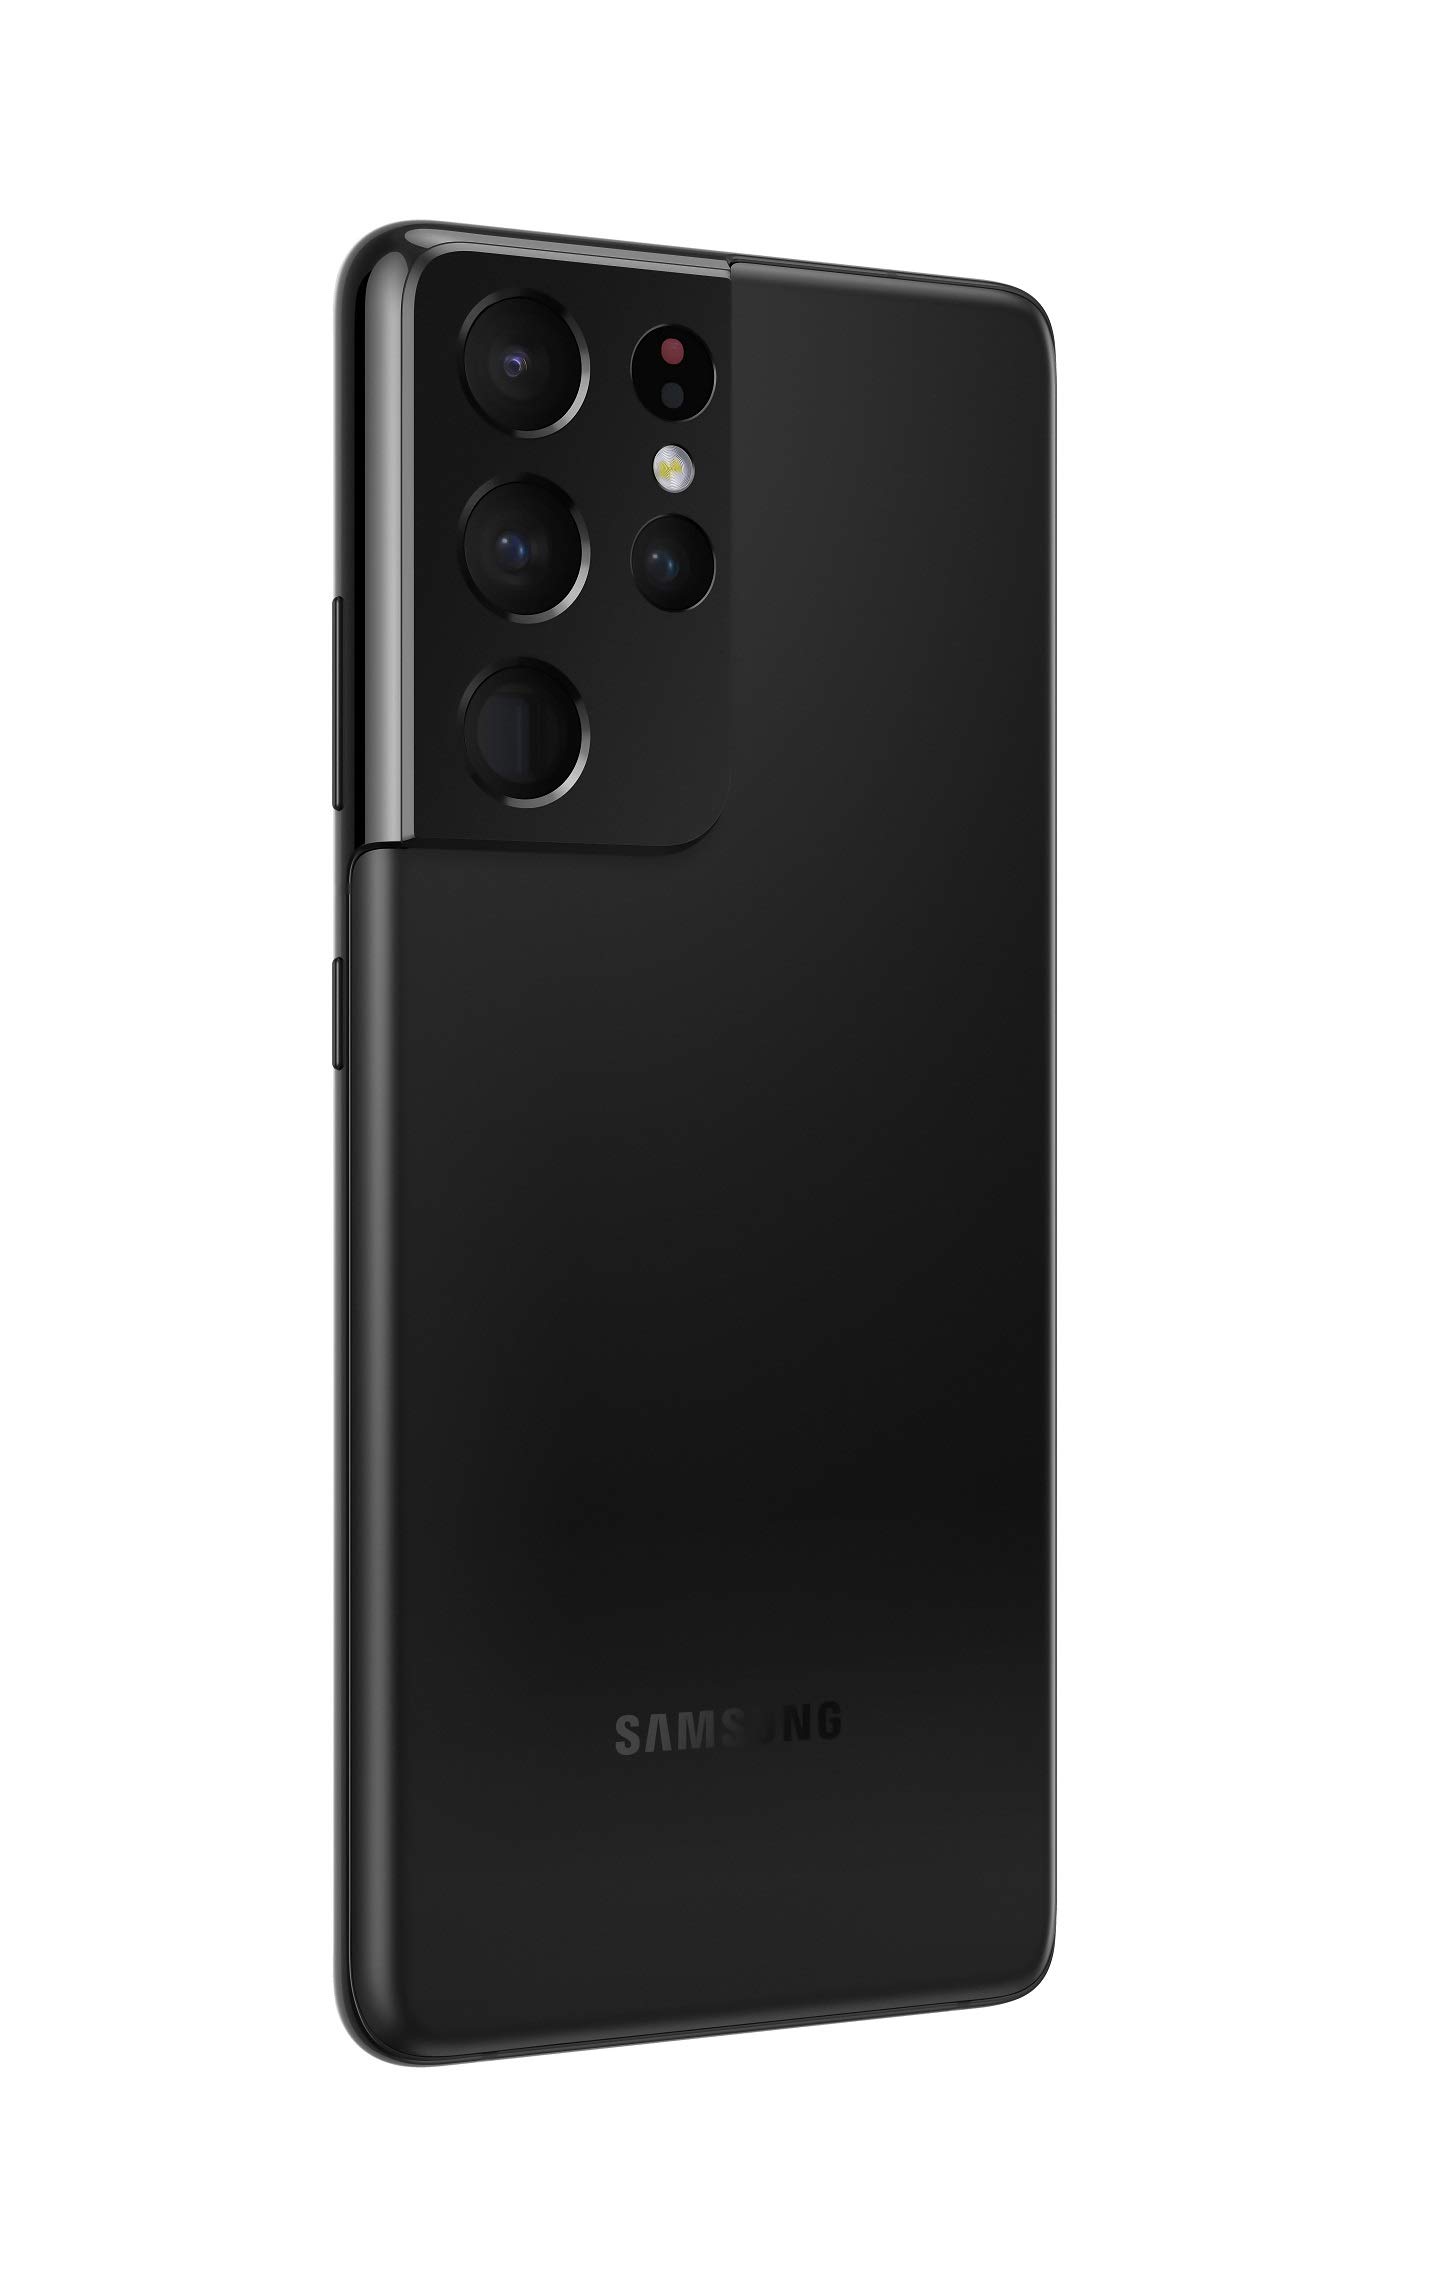 SAMSUNG Galaxy S21 Ultra 5G Factory Unlocked Android Cell Phone 128GB US Version Smartphone Pro-Grade Camera 8K Video 108MP High Res, Phantom Black